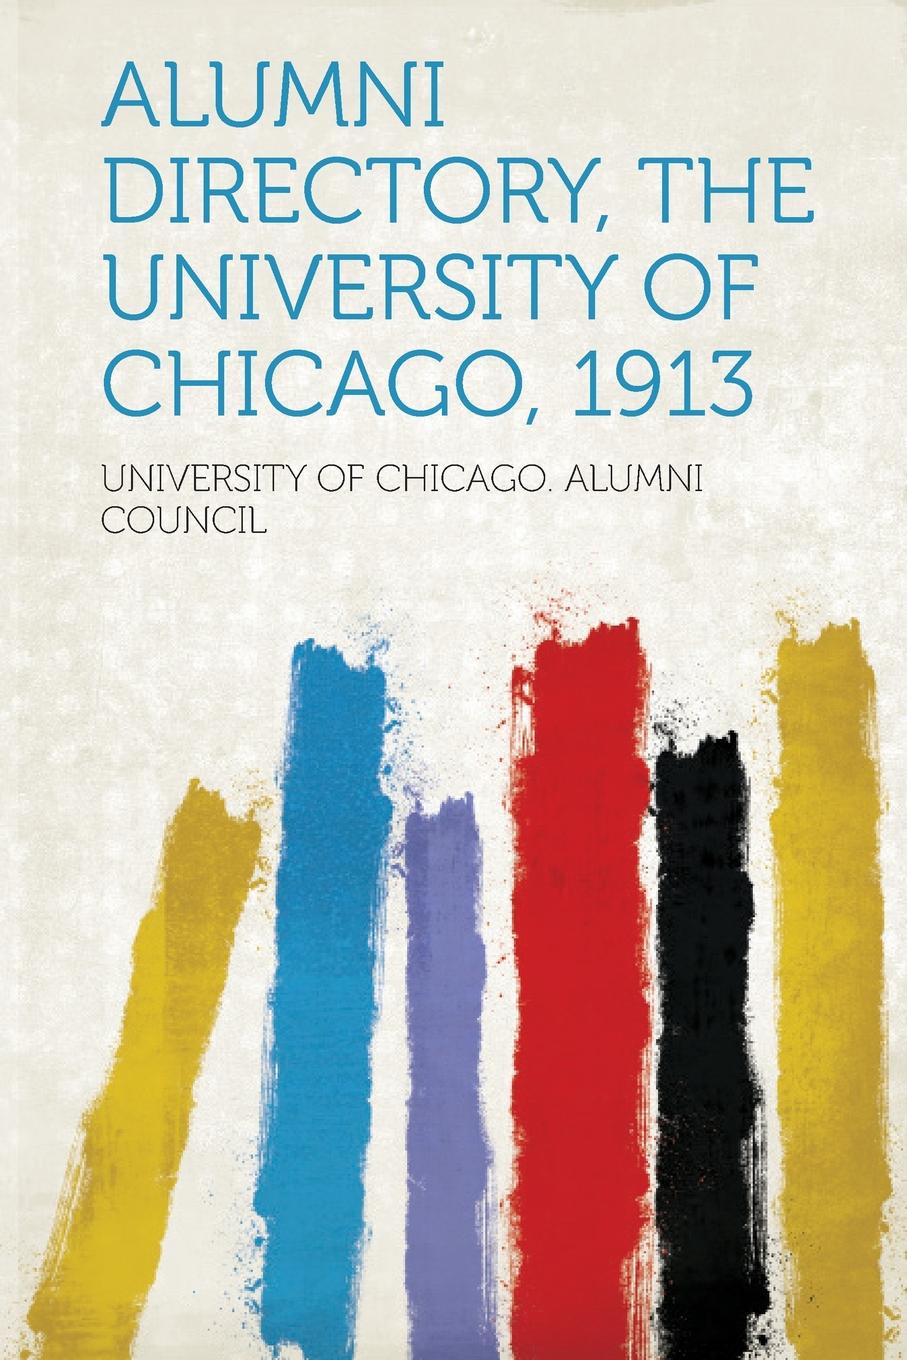 Alumni Directory, the University of Chicago, 1913